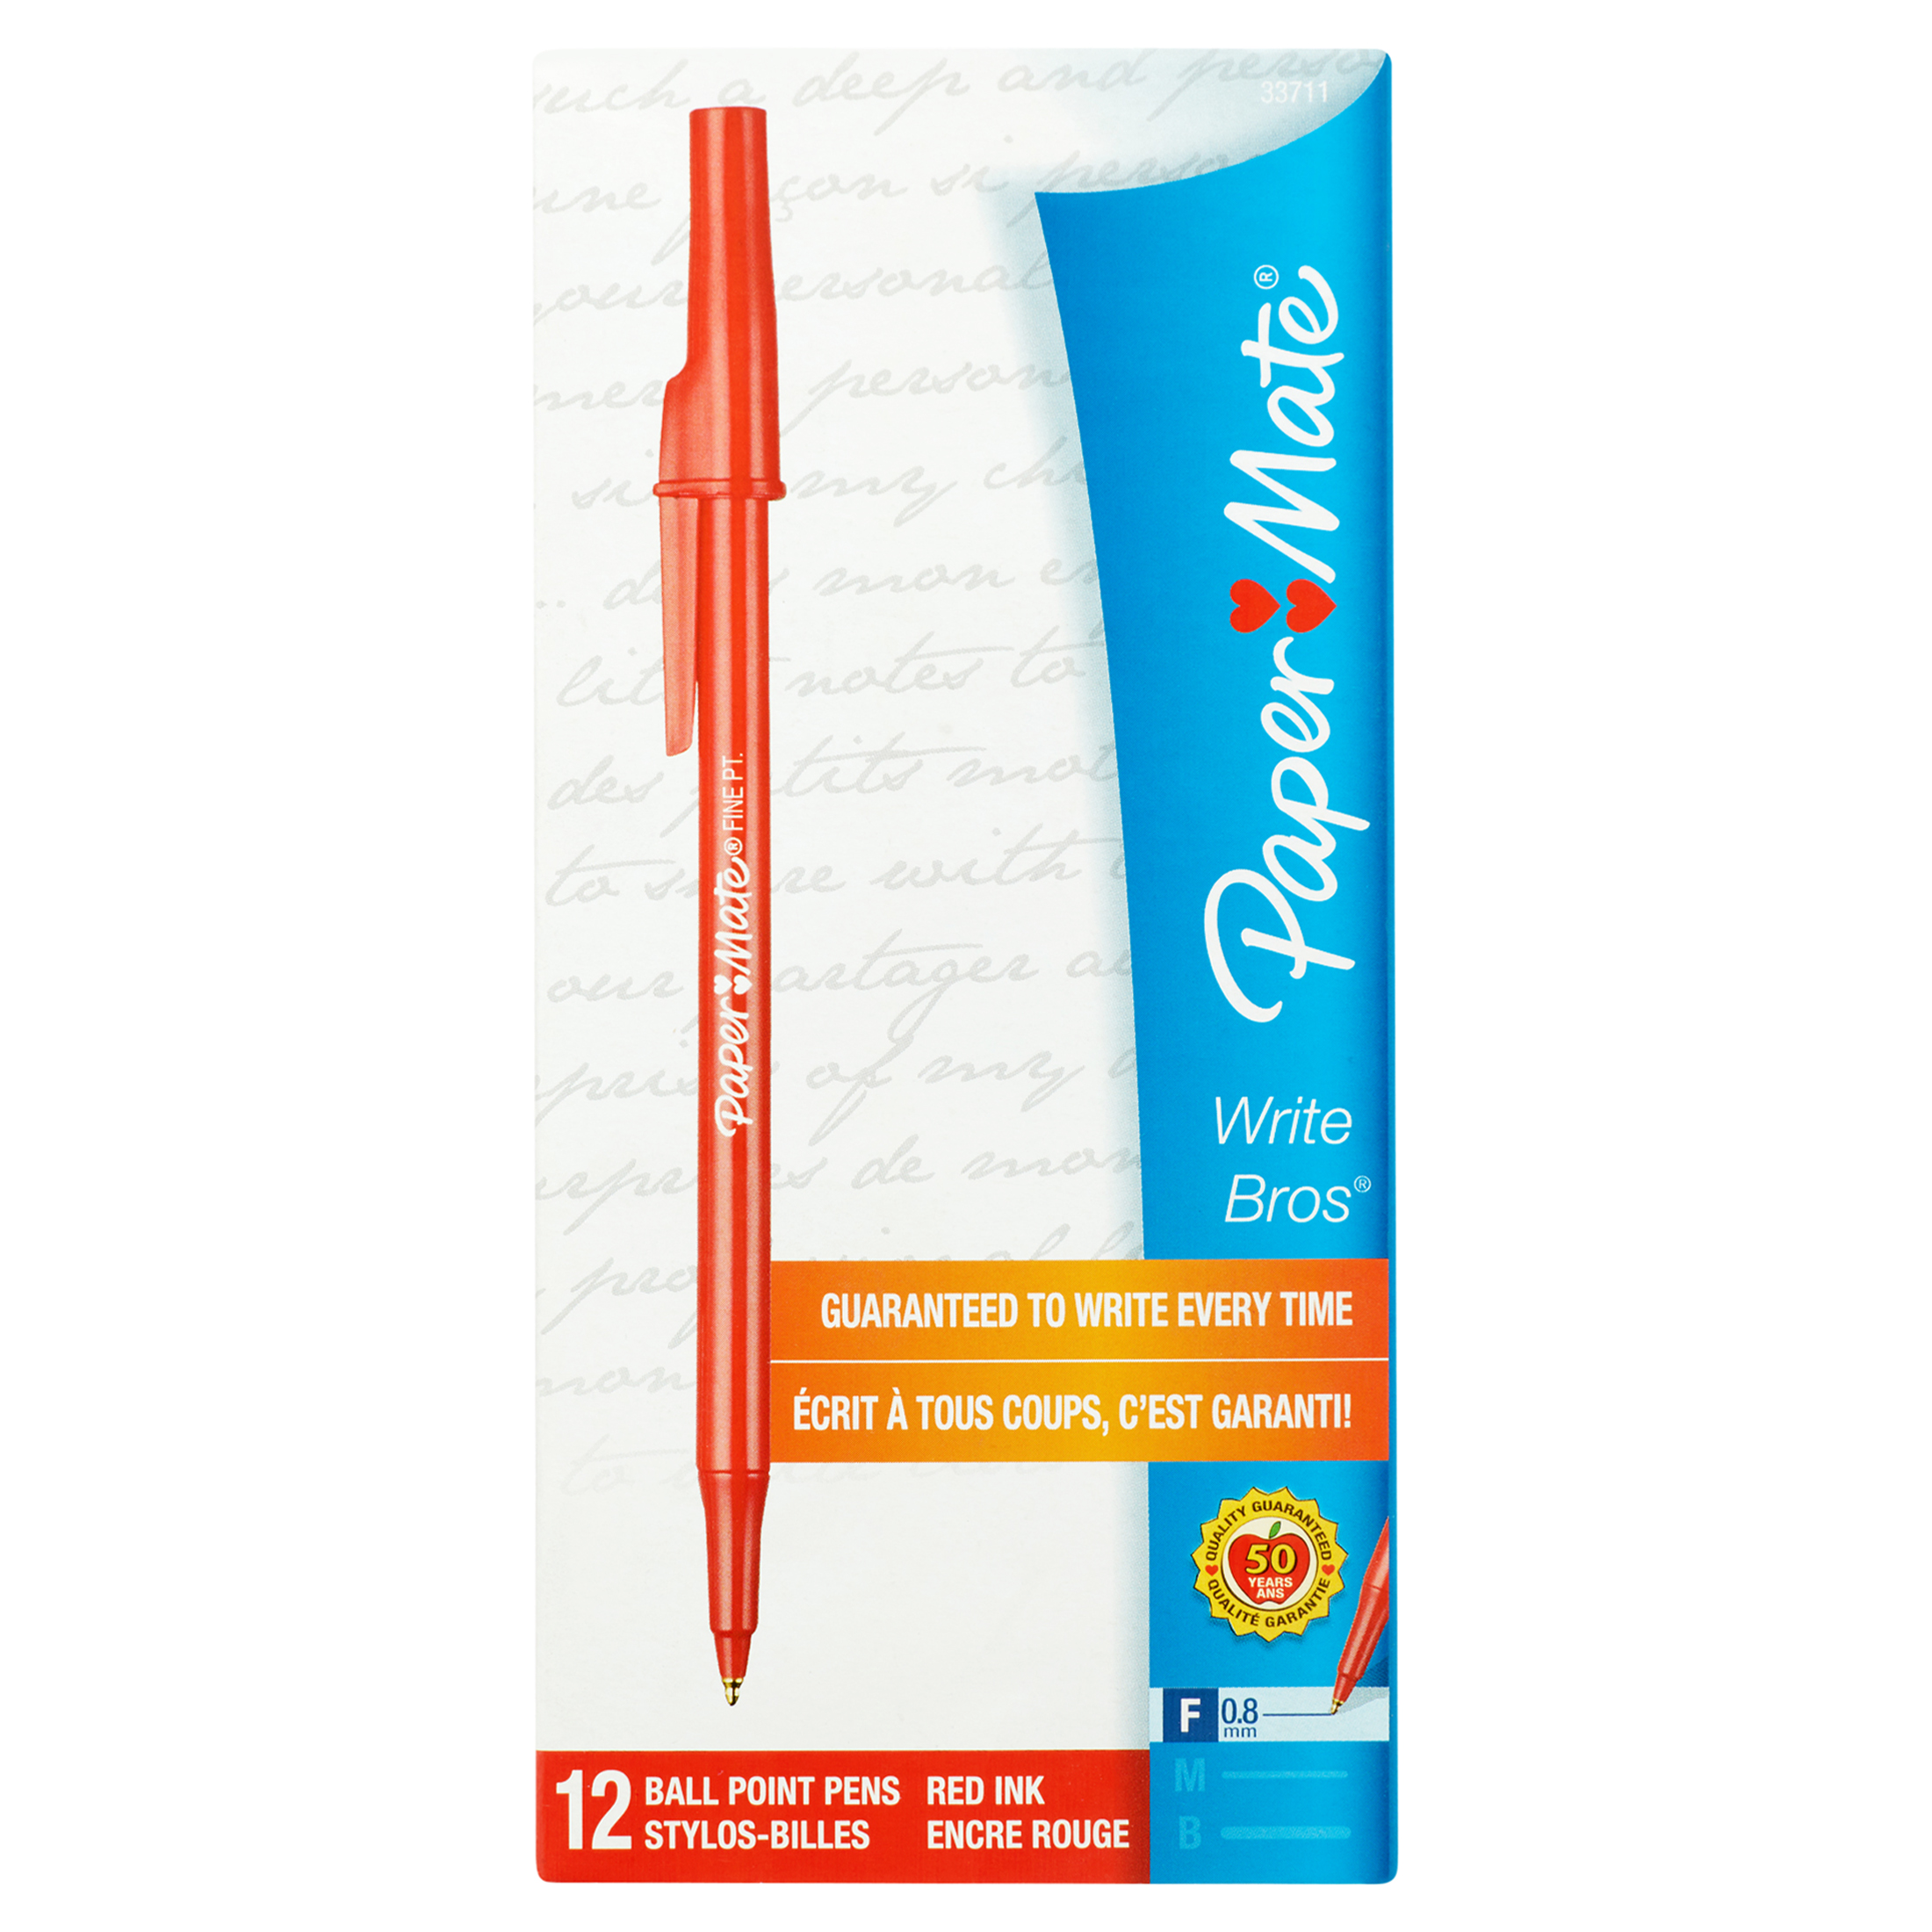 Paper Mate Write Bros Stick Ballpoint Pen, Red Ink, 0.8mm, Dozen - image 5 of 11